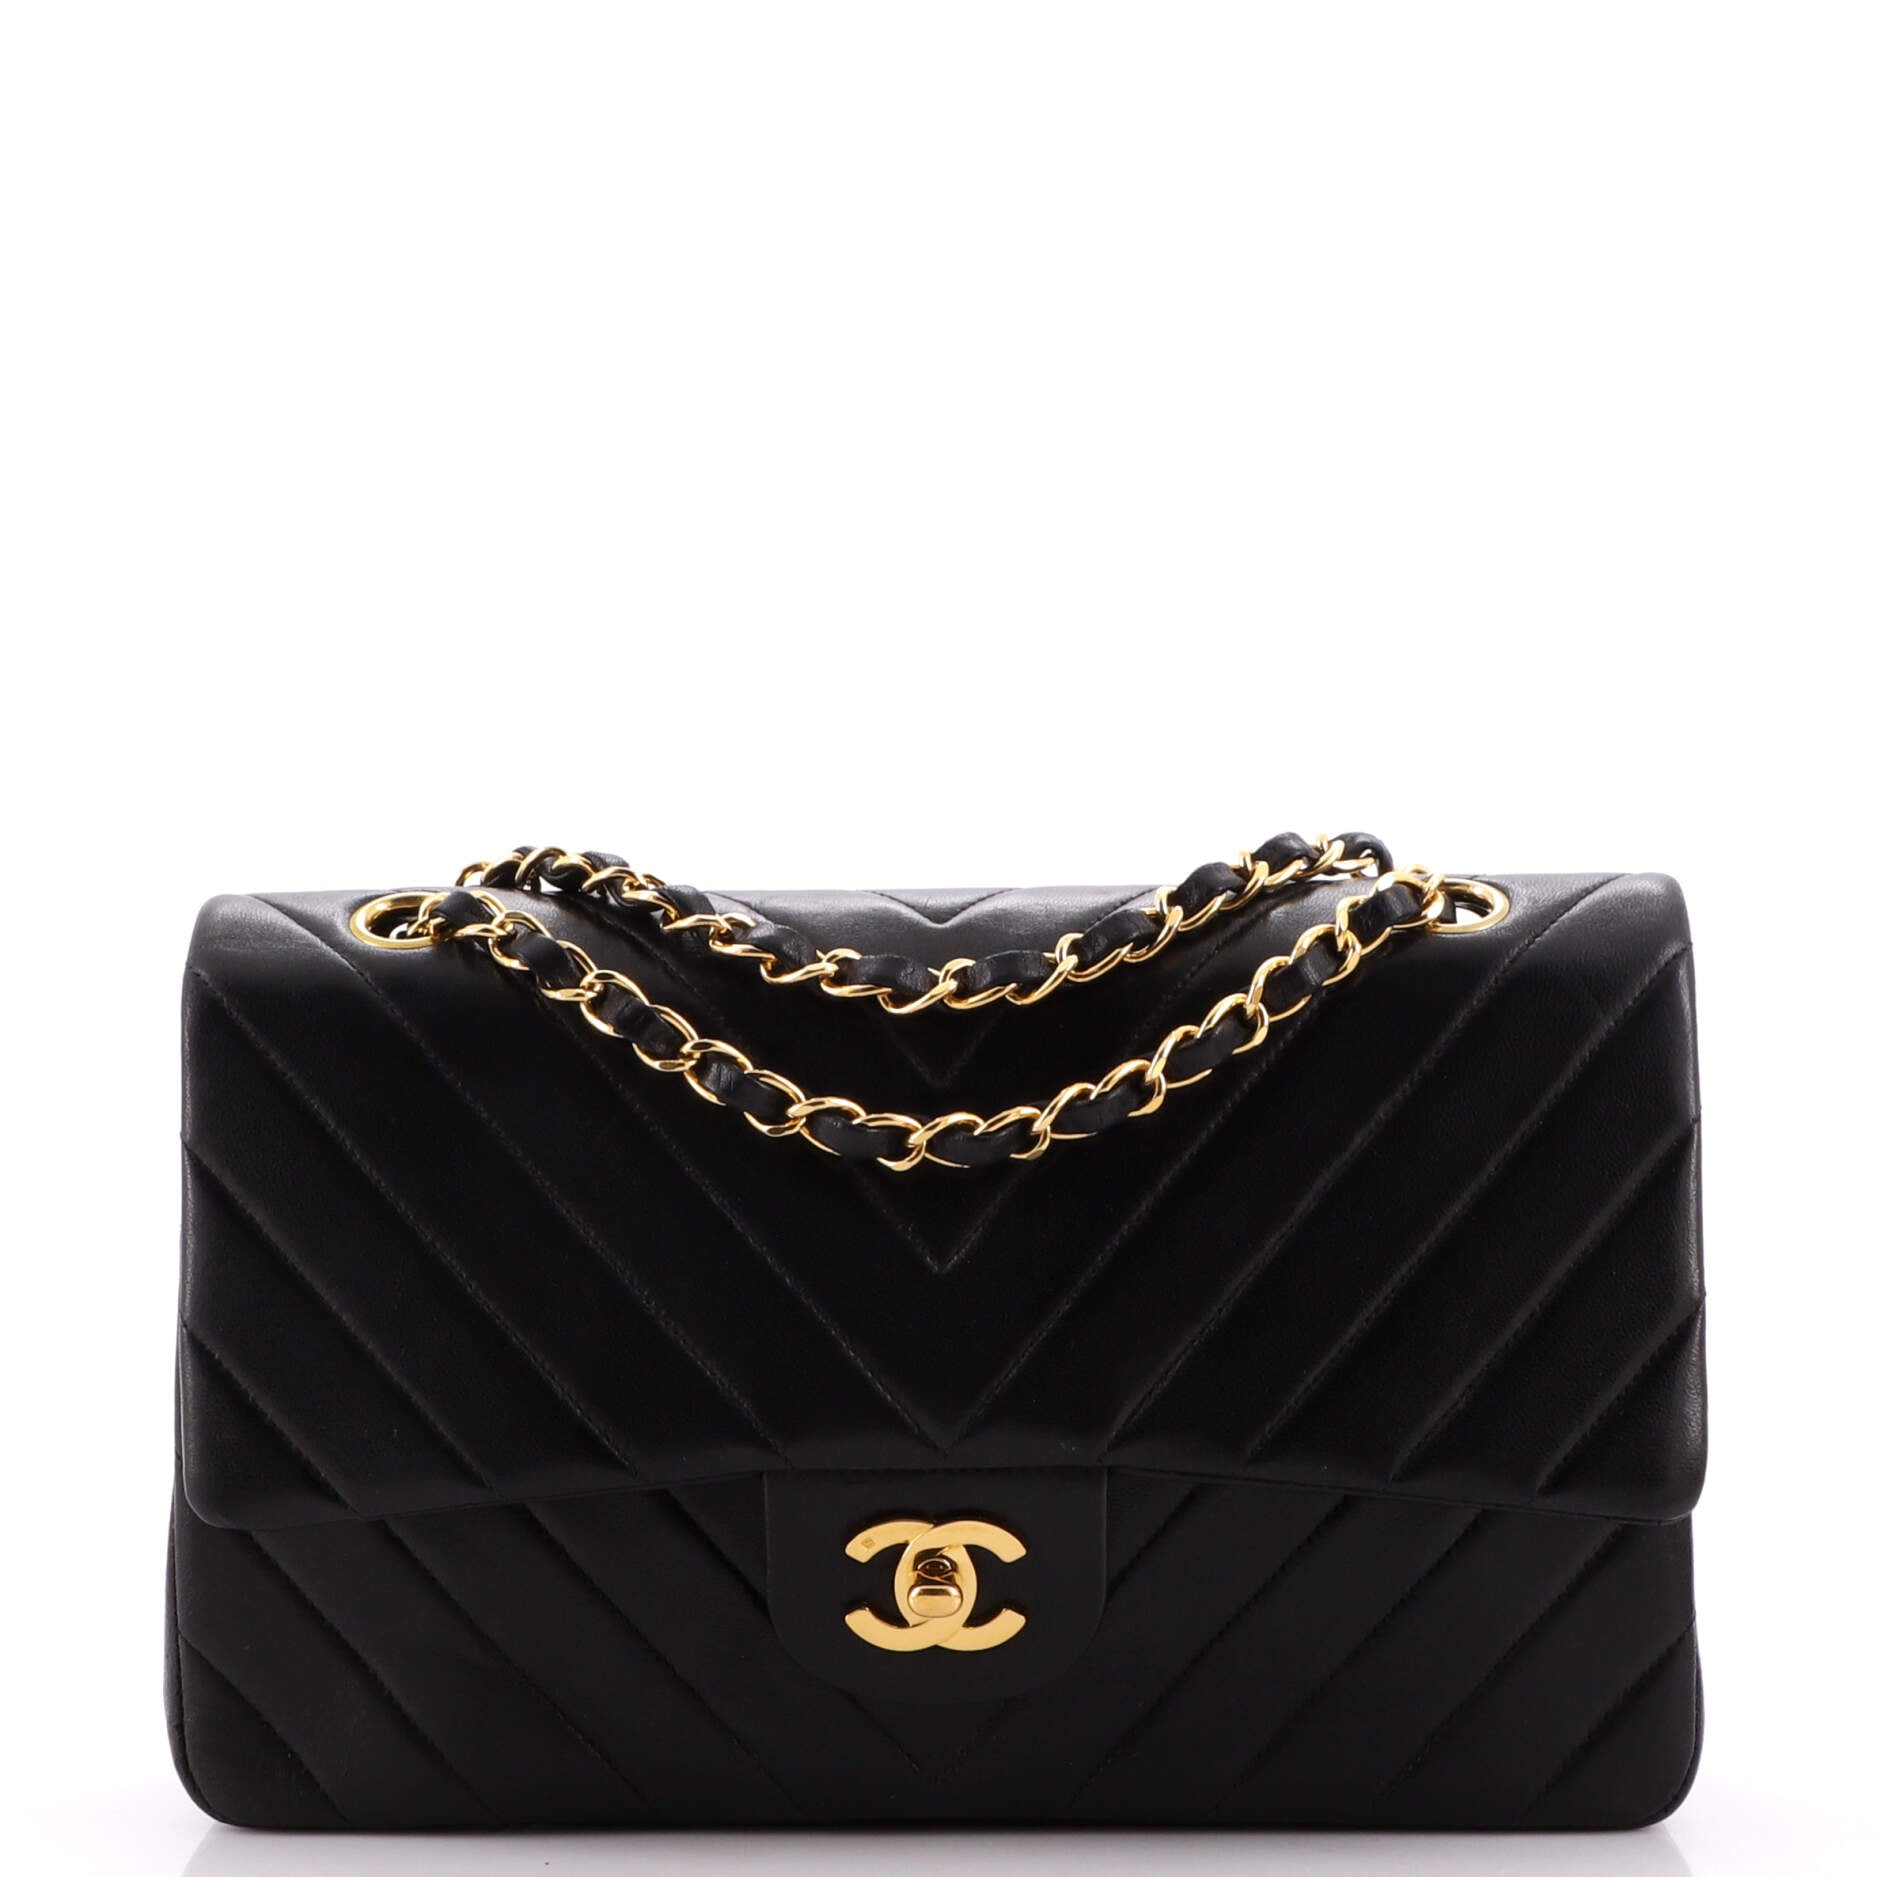 Chanel Bullskin Shopping Bag - Black Totes, Handbags - CHA745432